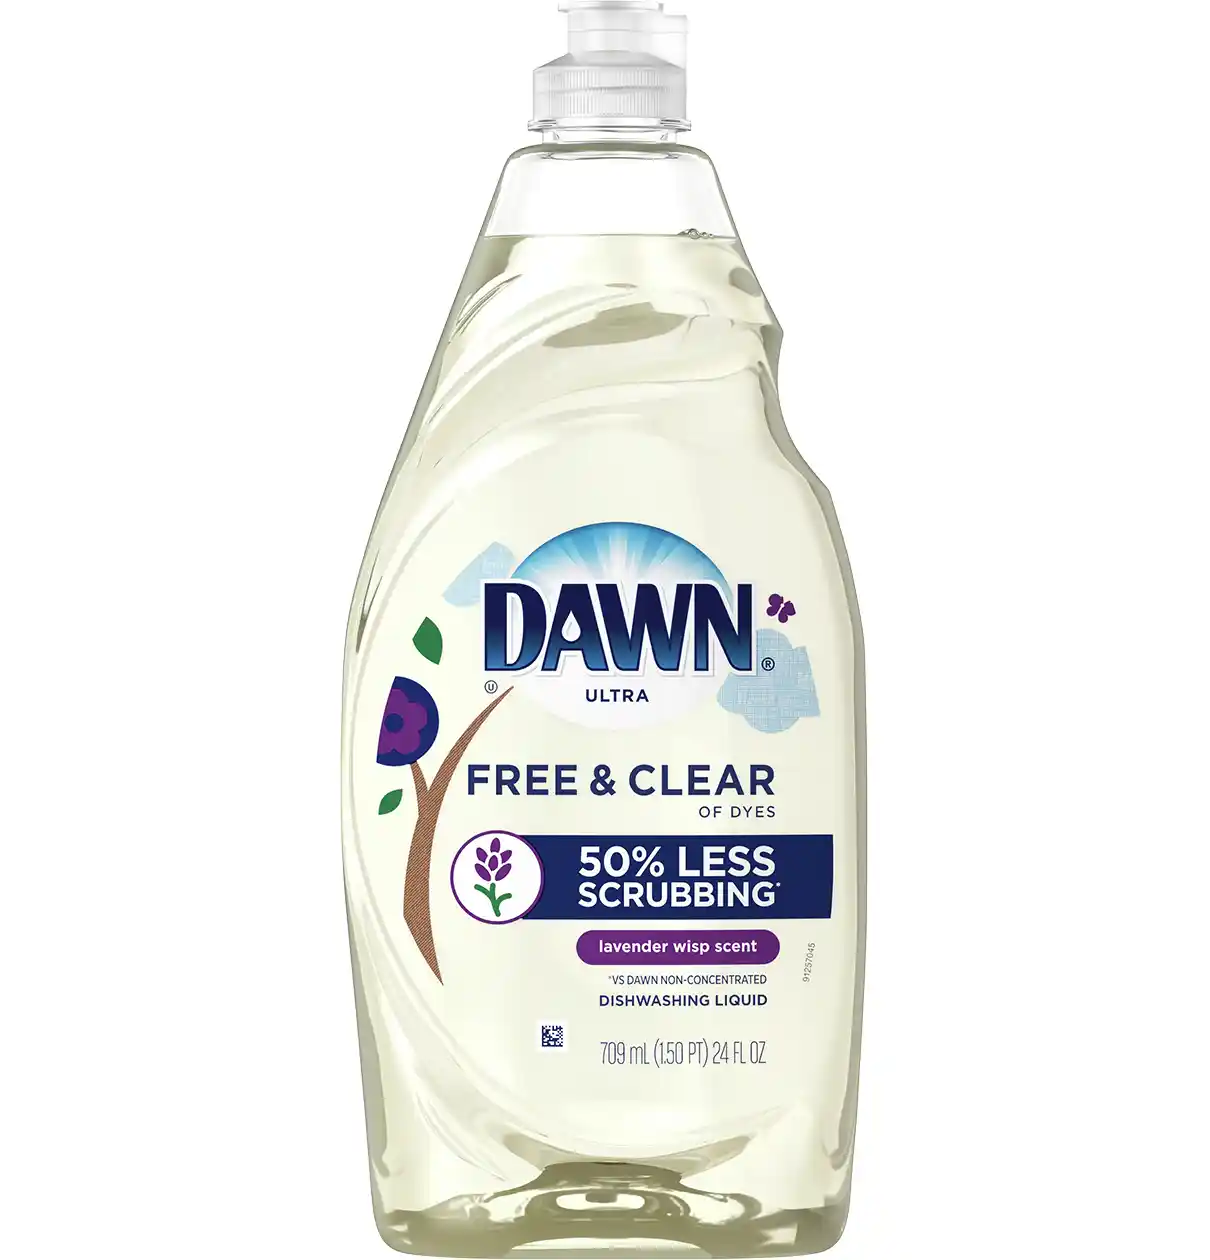 Líquido para trastes Dawn Free & Clear, Brizna de lavanda